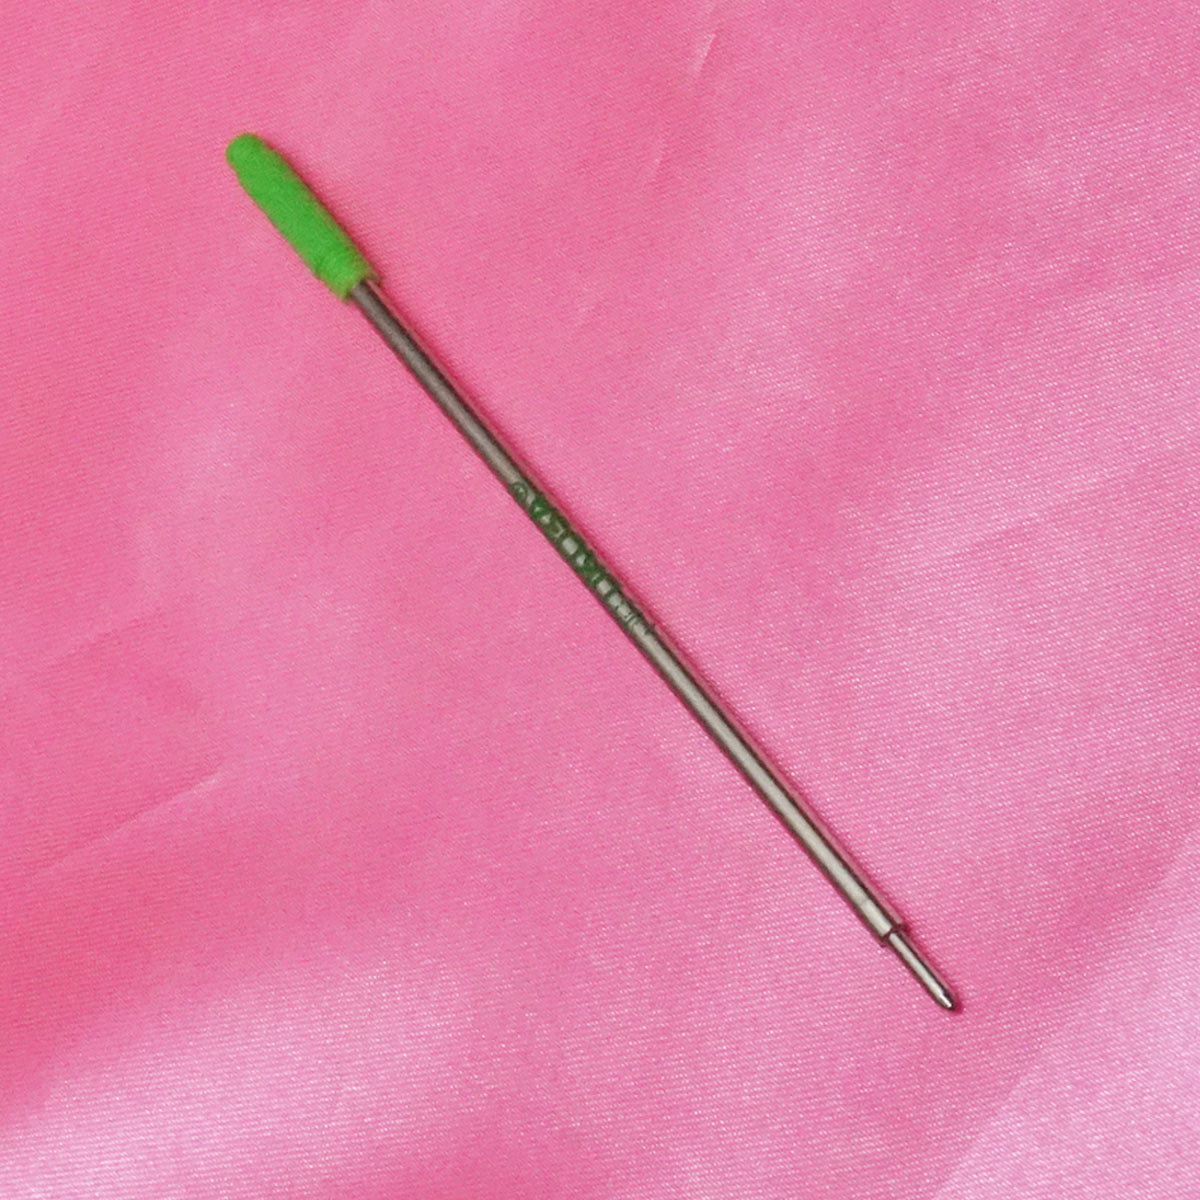 Ukoba Bold Green Writing Twist Ball Pen Refill SKU 71105